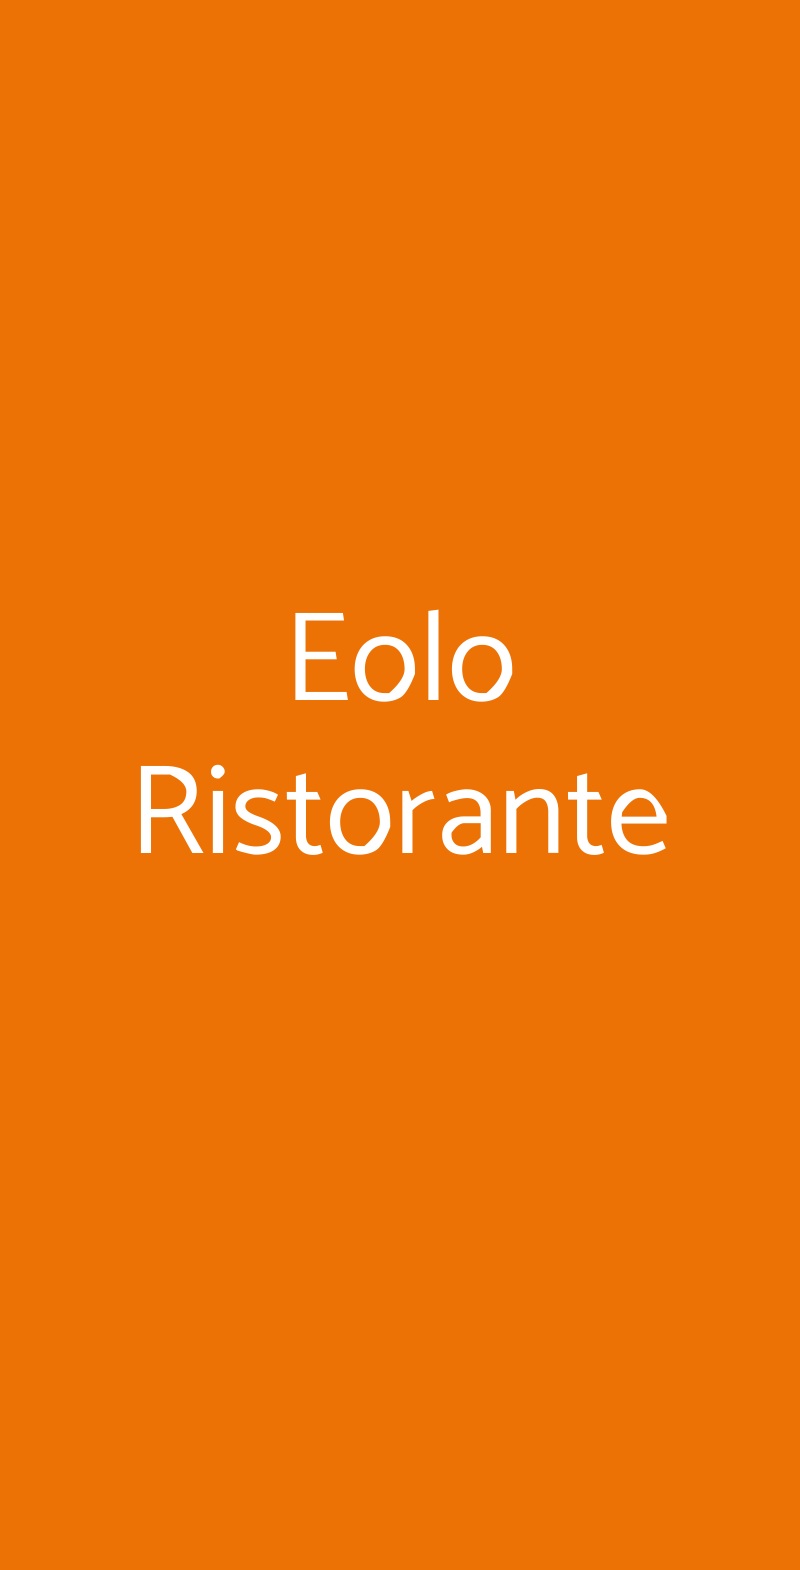 Eolo Ristorante San Donato Milanese menù 1 pagina